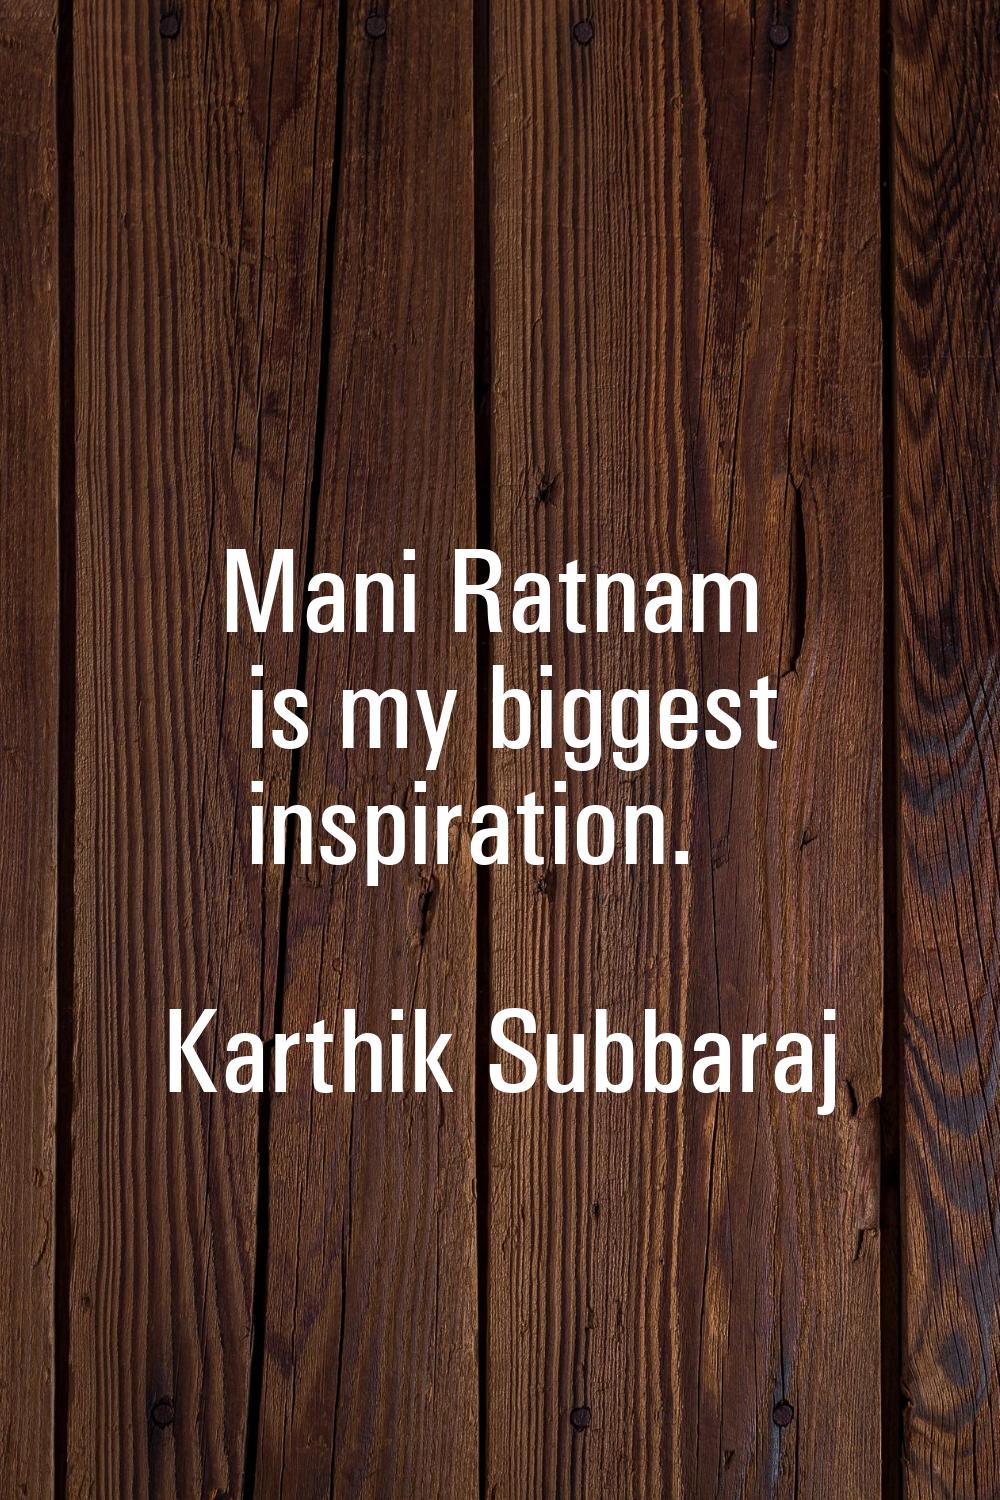 Mani Ratnam is my biggest inspiration.